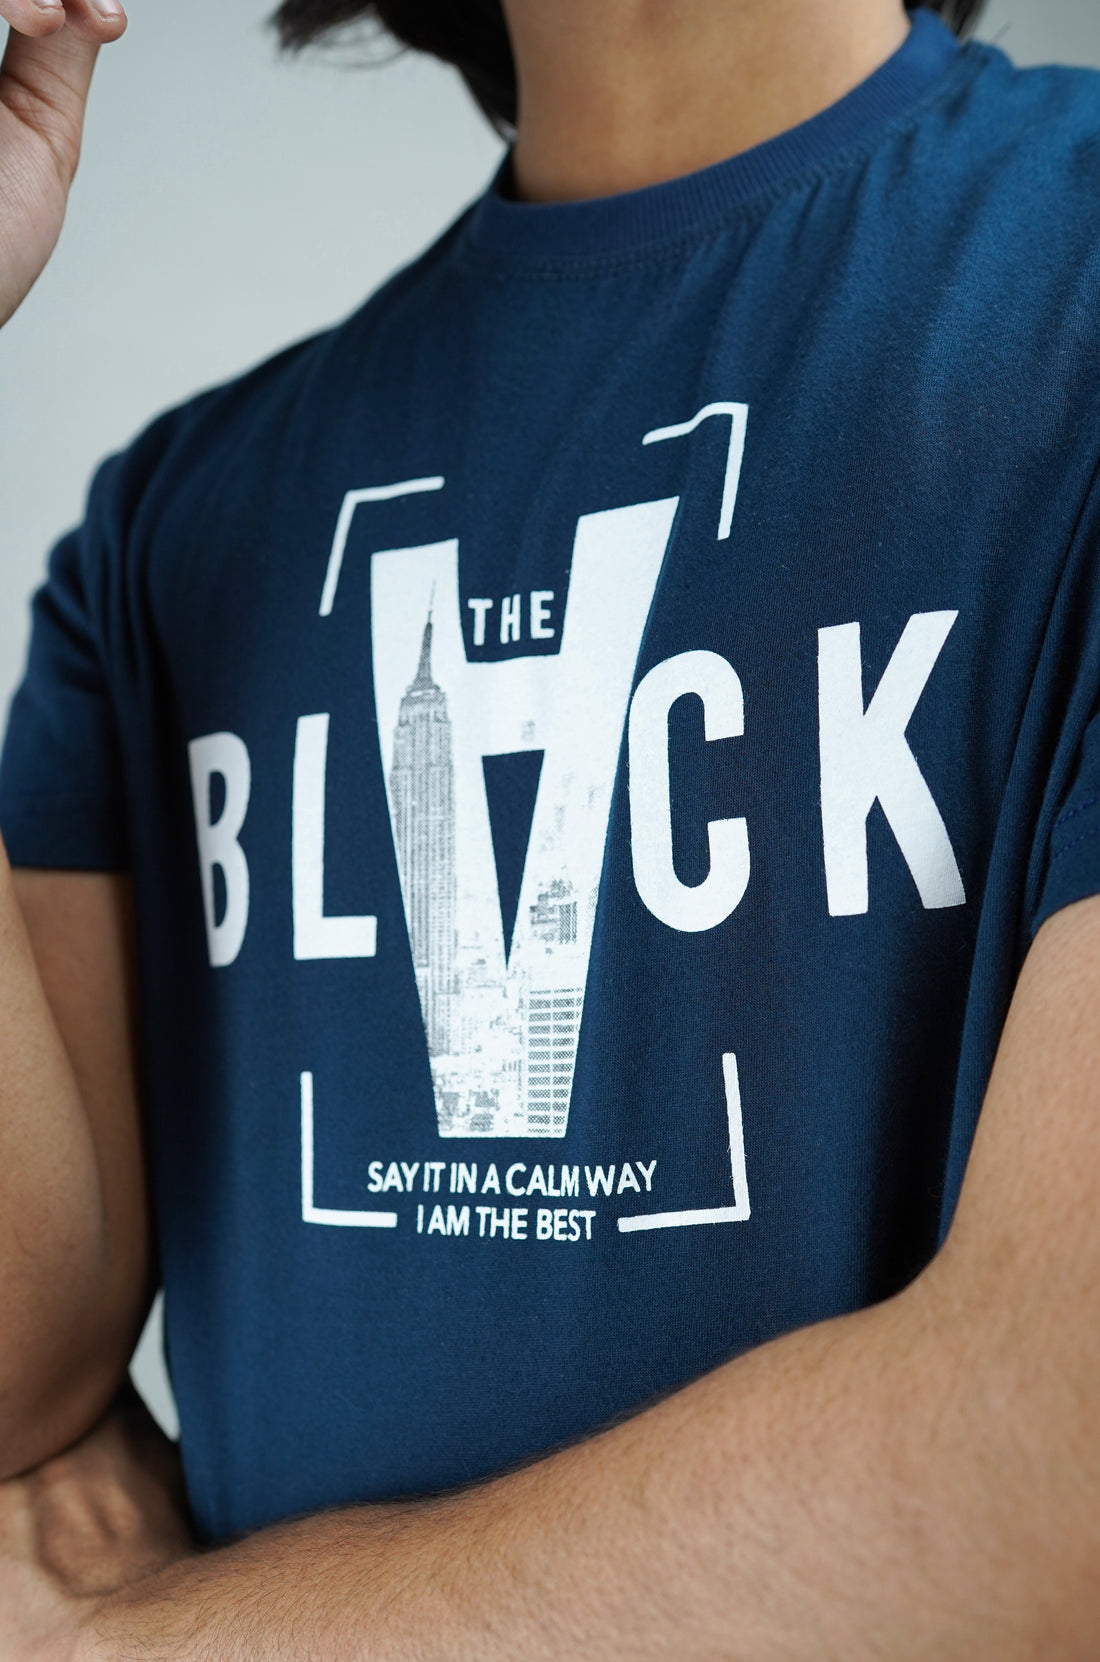 "The Black" Printed T Shirt